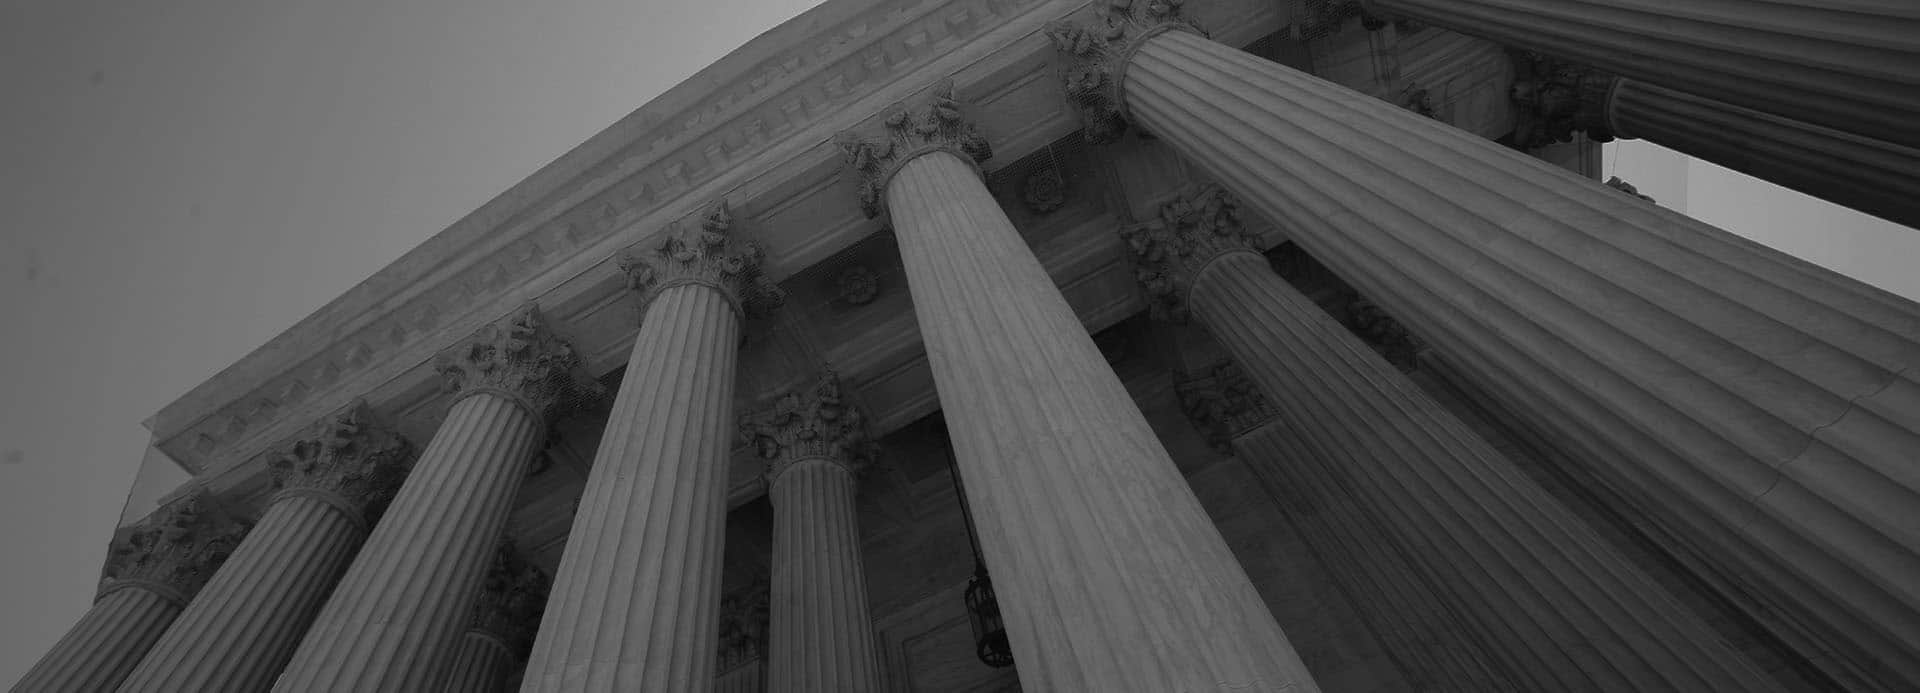 Supreme Courthouse columns